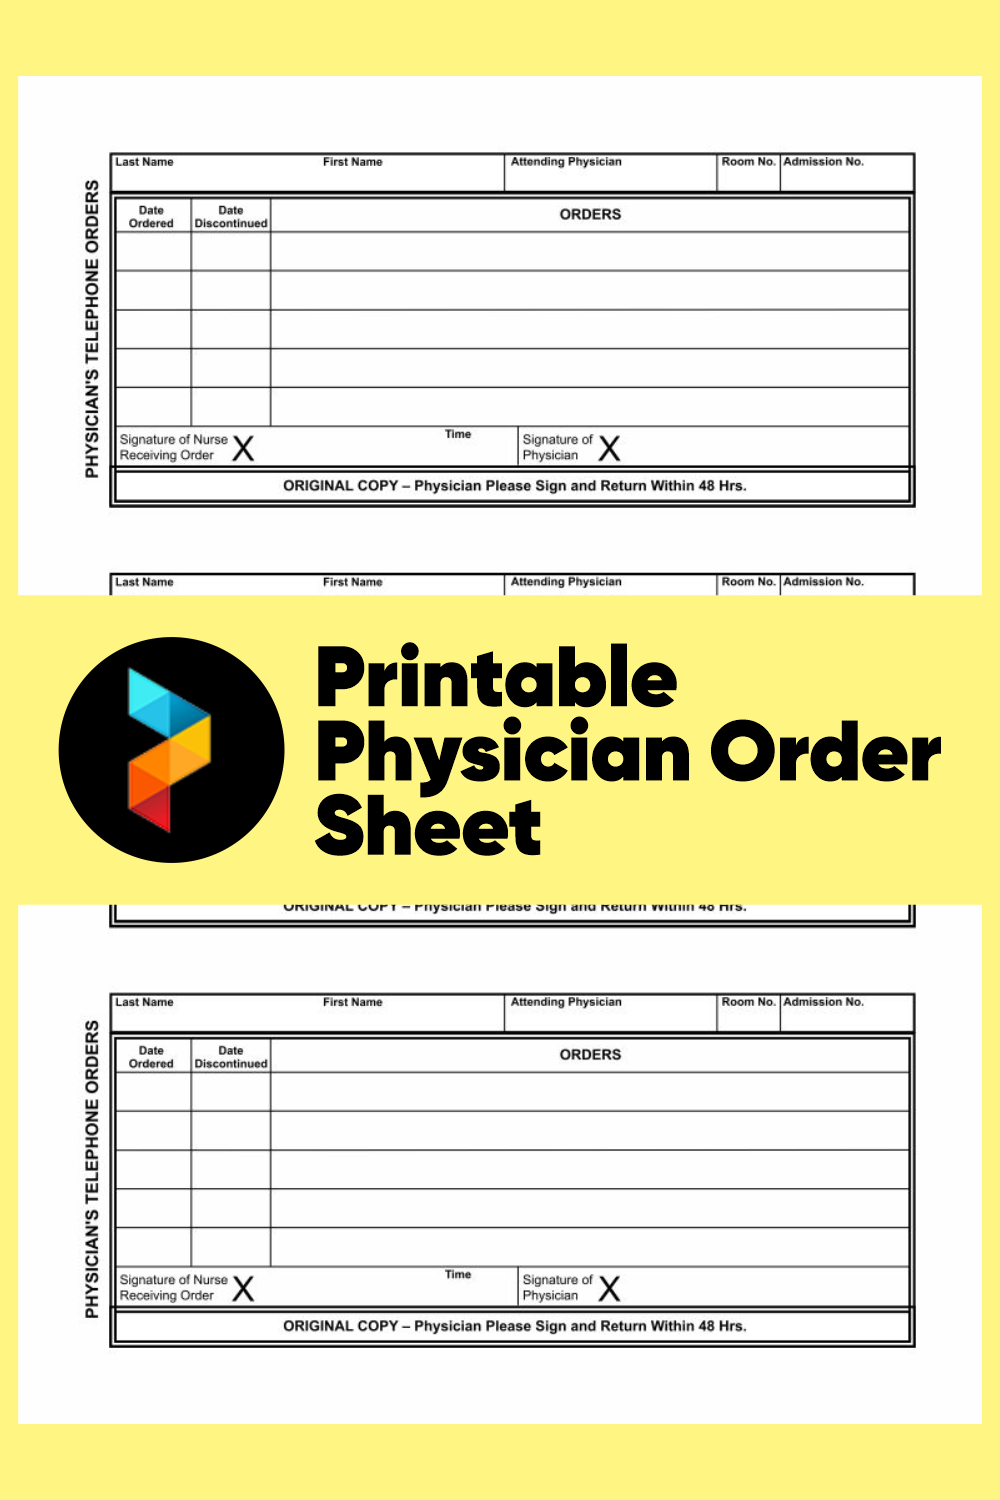 10 Best Printable Physician Order Sheet